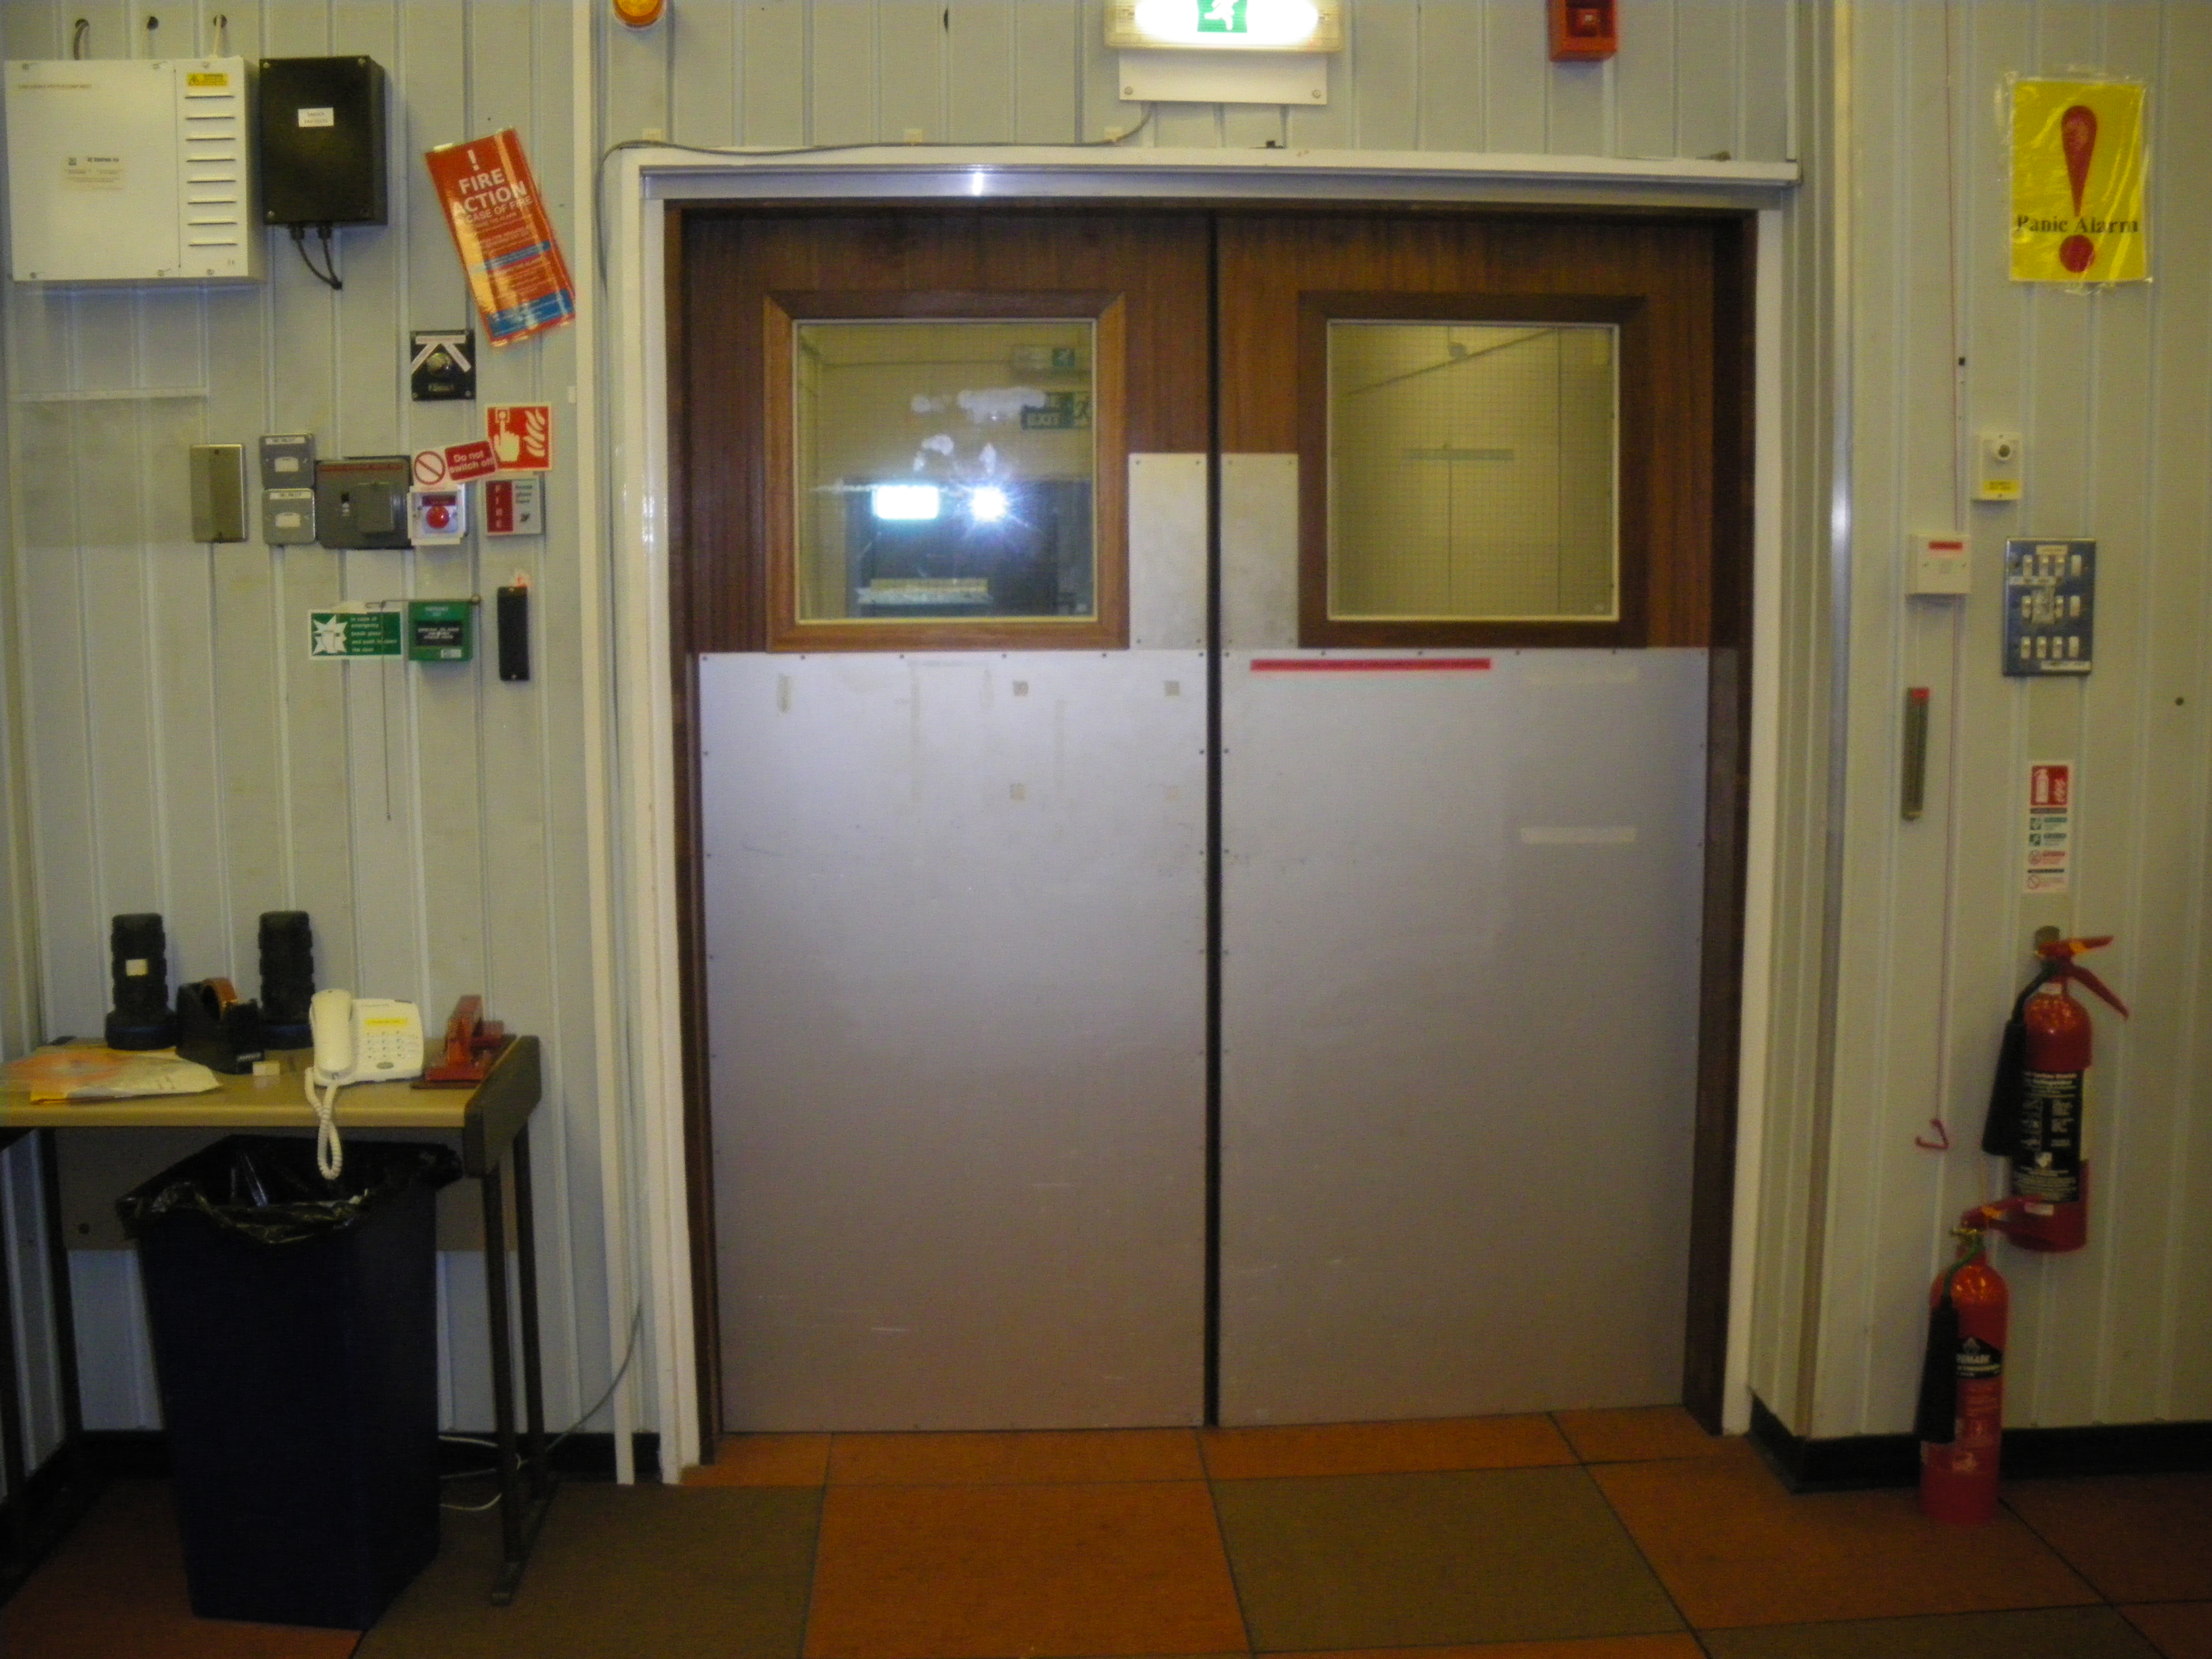 W404 main entrance/exit doors